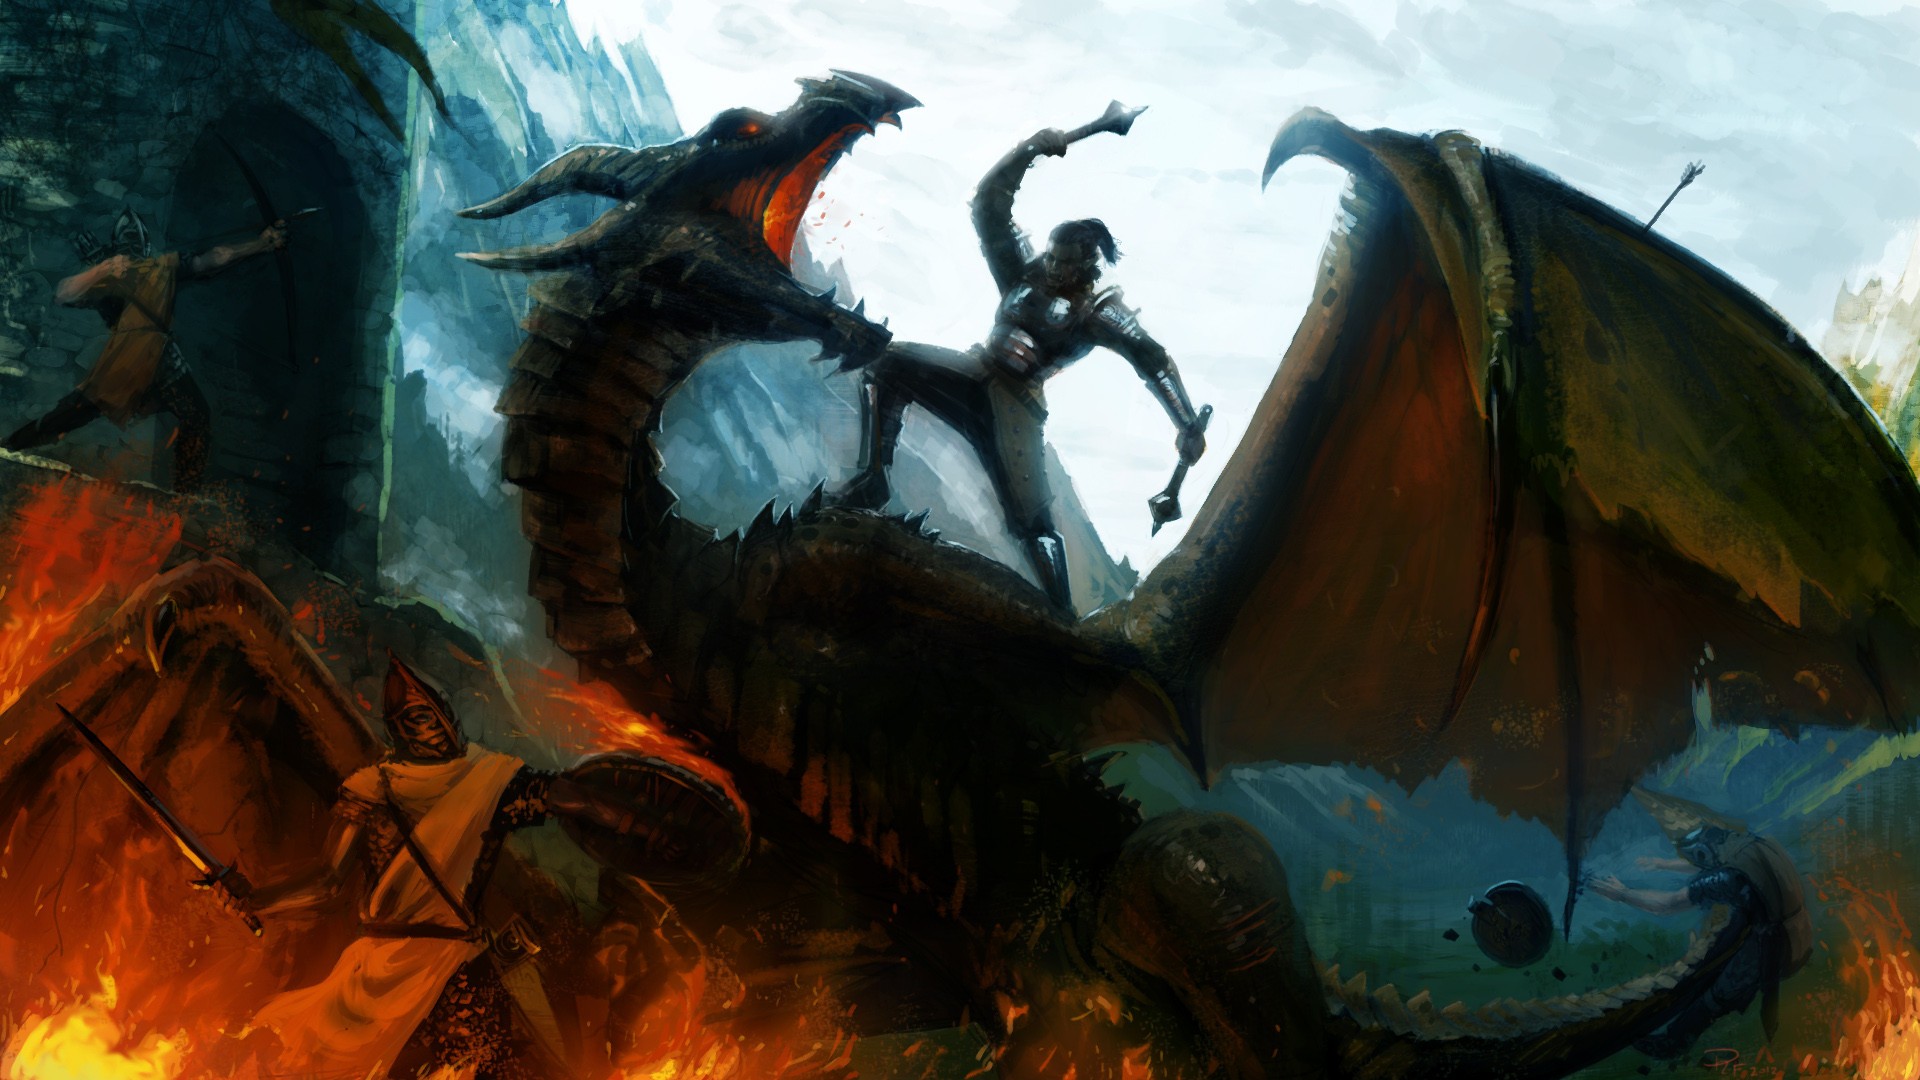 soldier, Digital art, Fantasy art, Dragon, Wings, Fighting, Castle, Fire, War, The Elder Scrolls V: Skyrim, Video games Wallpaper